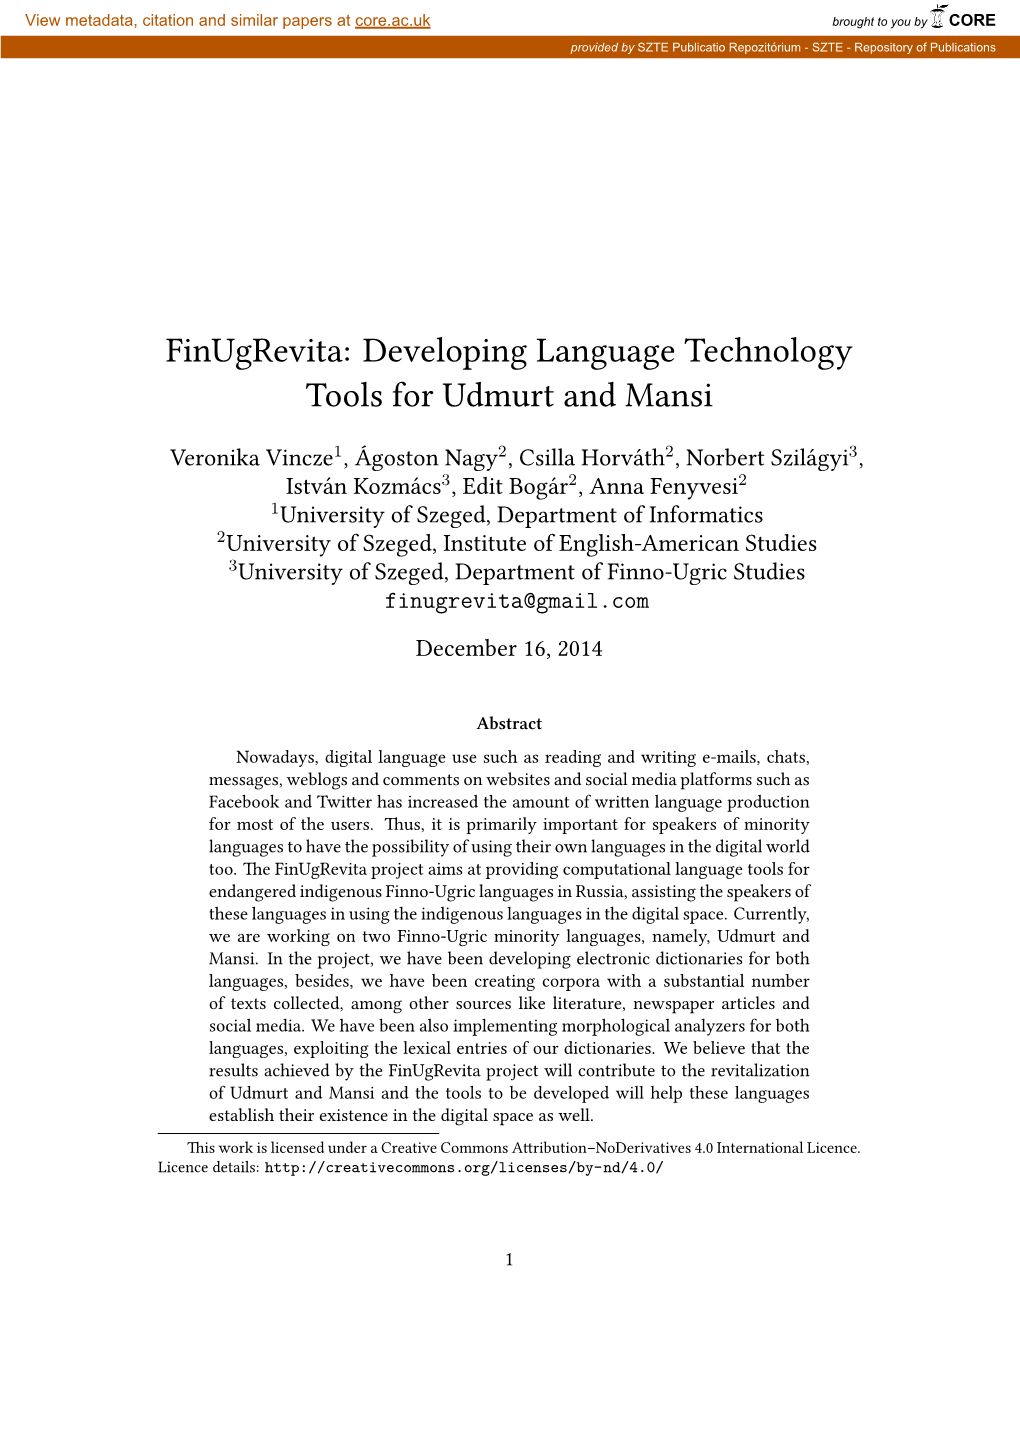 Developing Language Technology Tools for Udmurt and Mansi